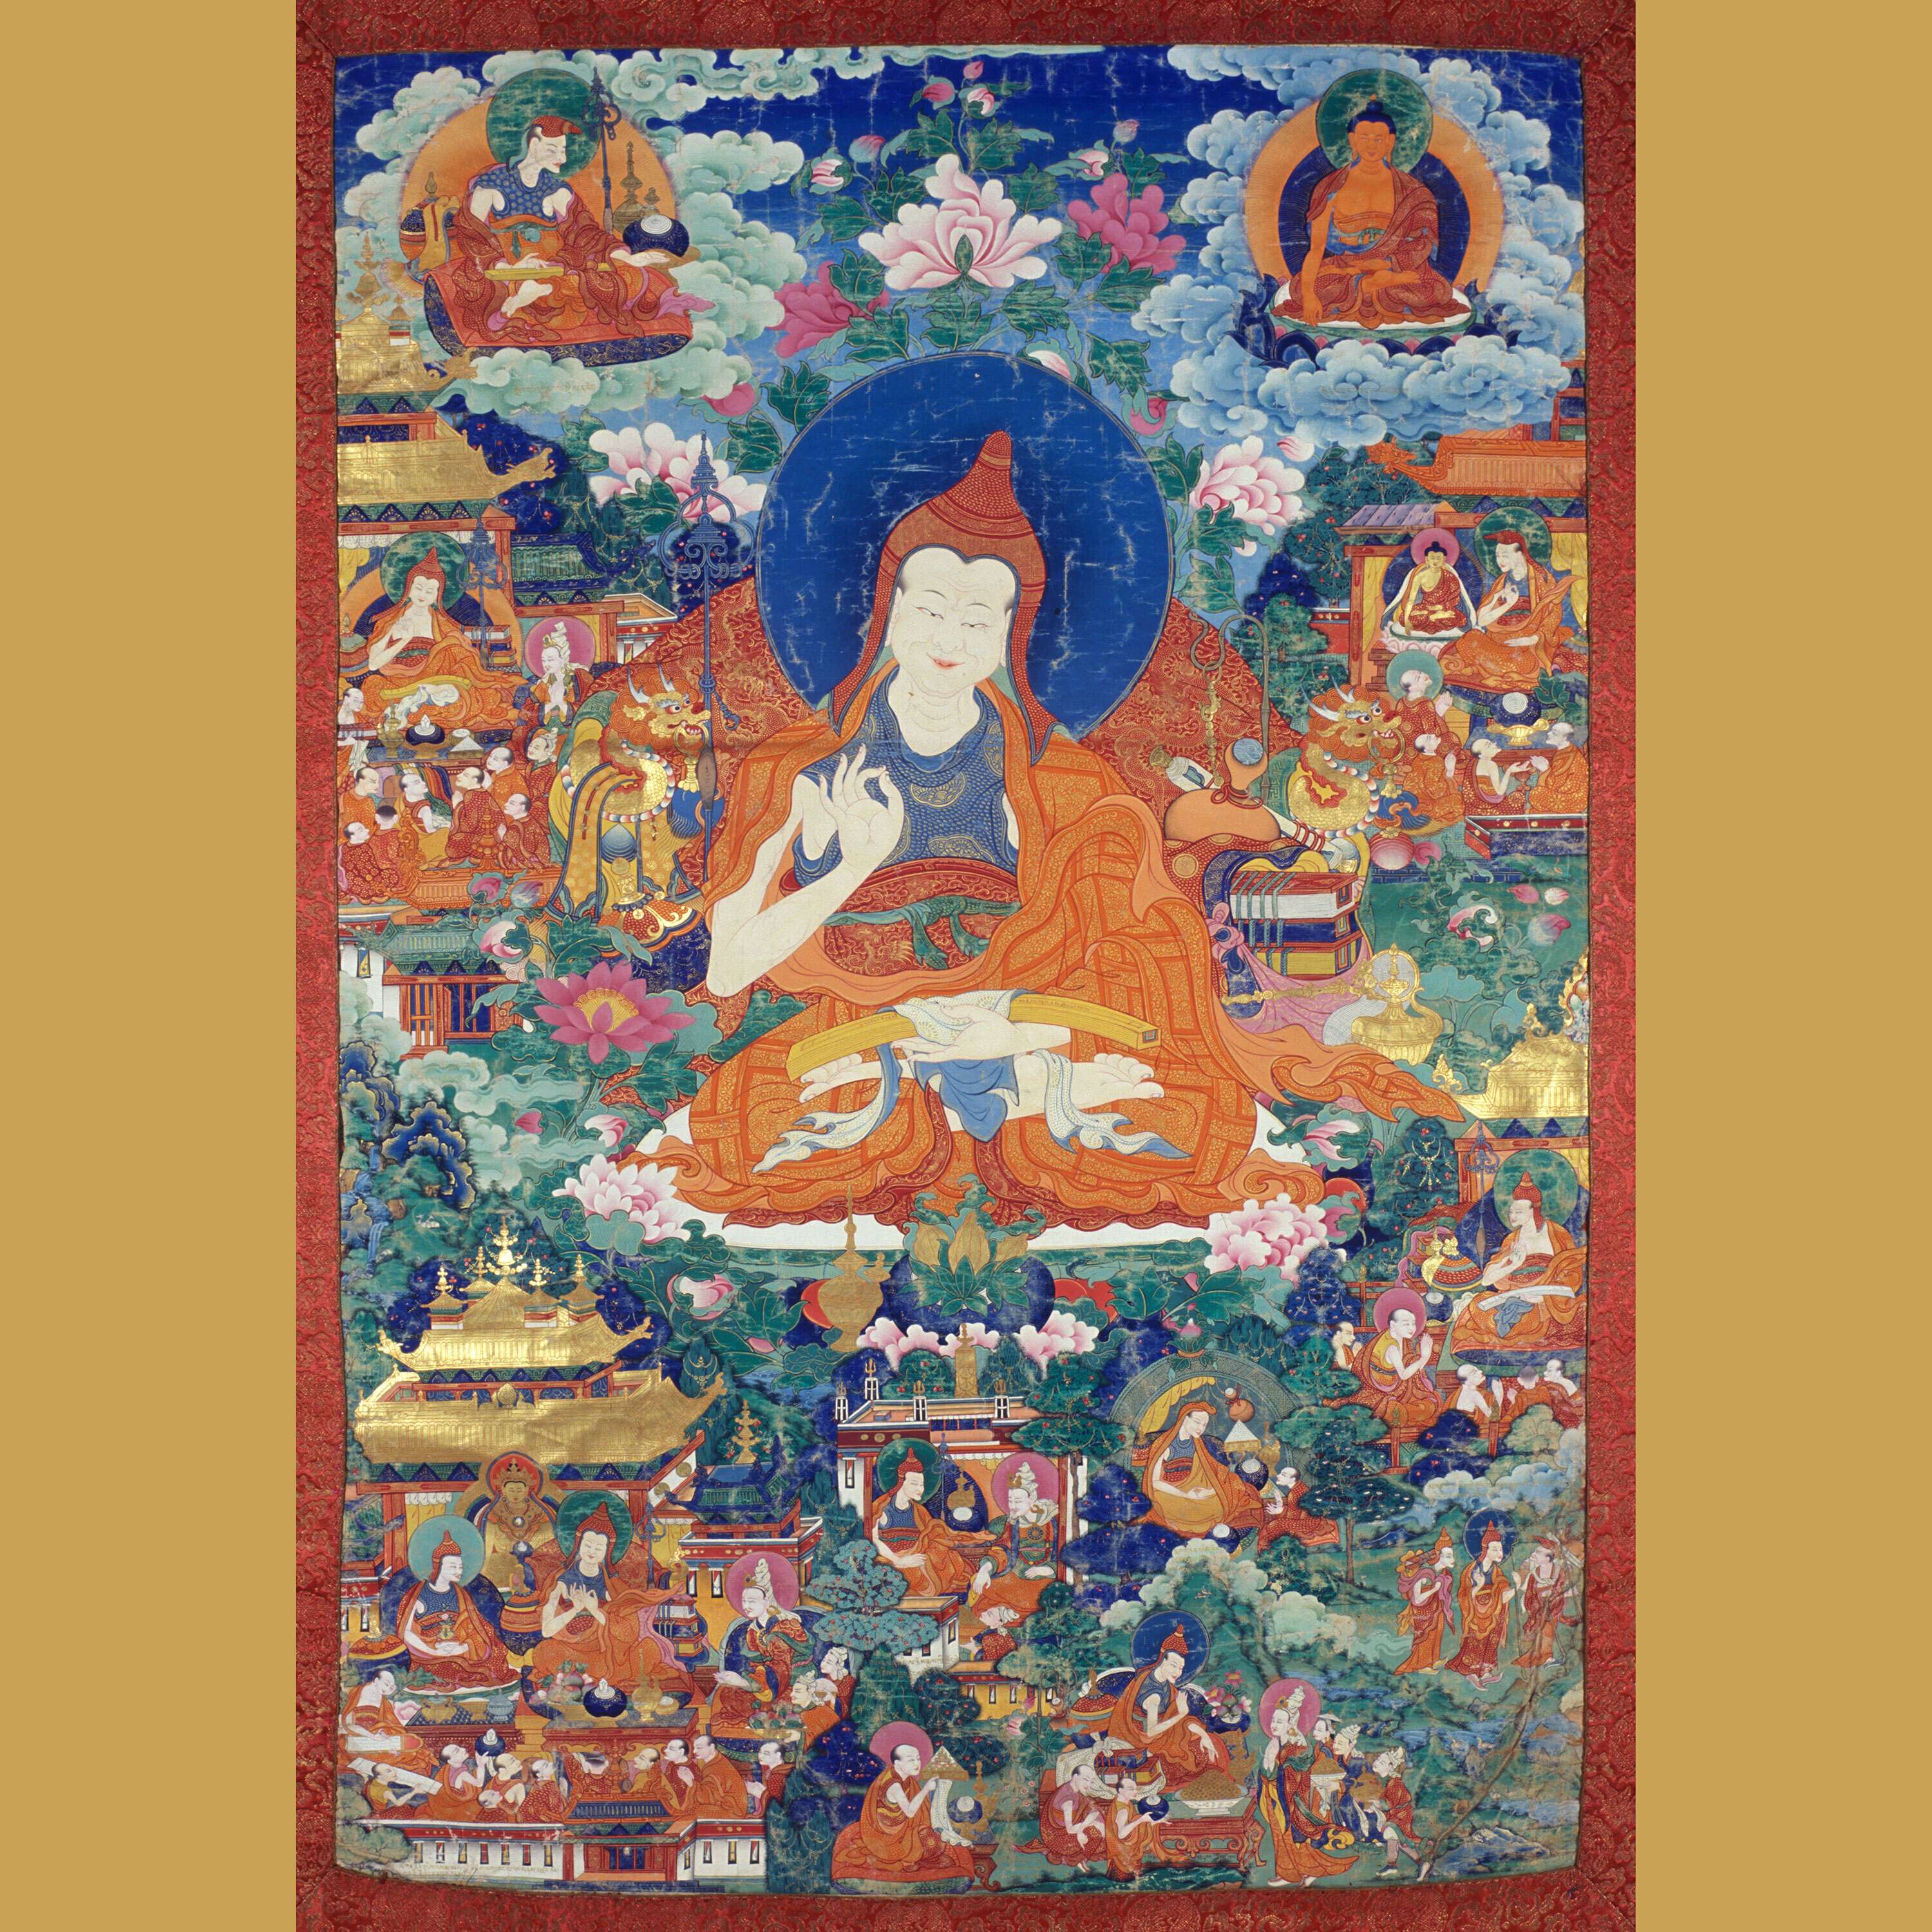 Mindfulness Meditation with Lama Aria Drolma 11/28/2022